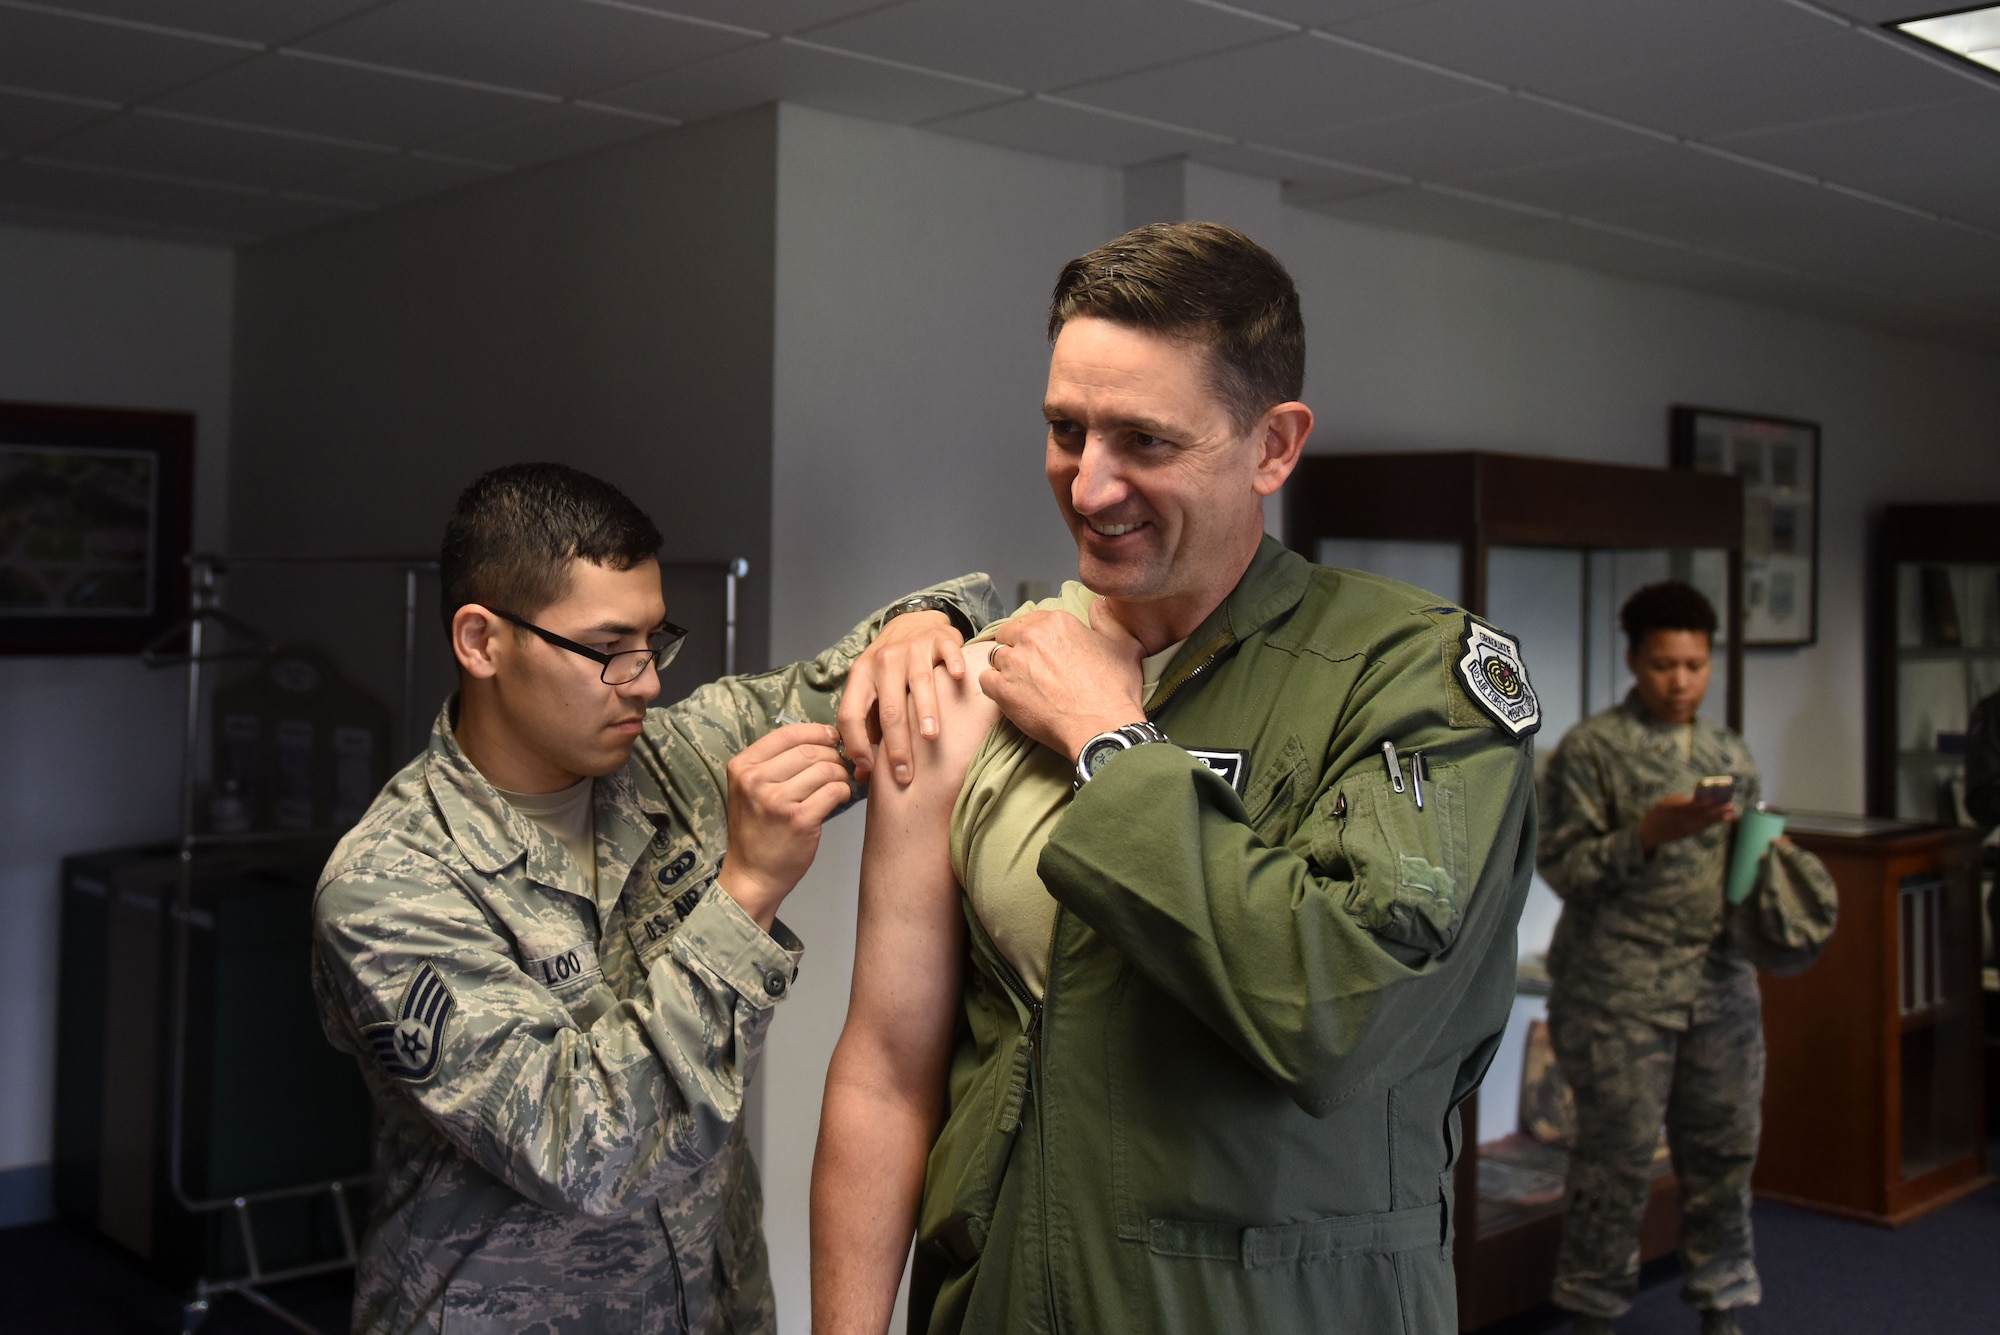 A man with dark hair wearing a flight suit receives a flu shot from a man with dark hair and glasses wearing the Airman Battle Uniform.